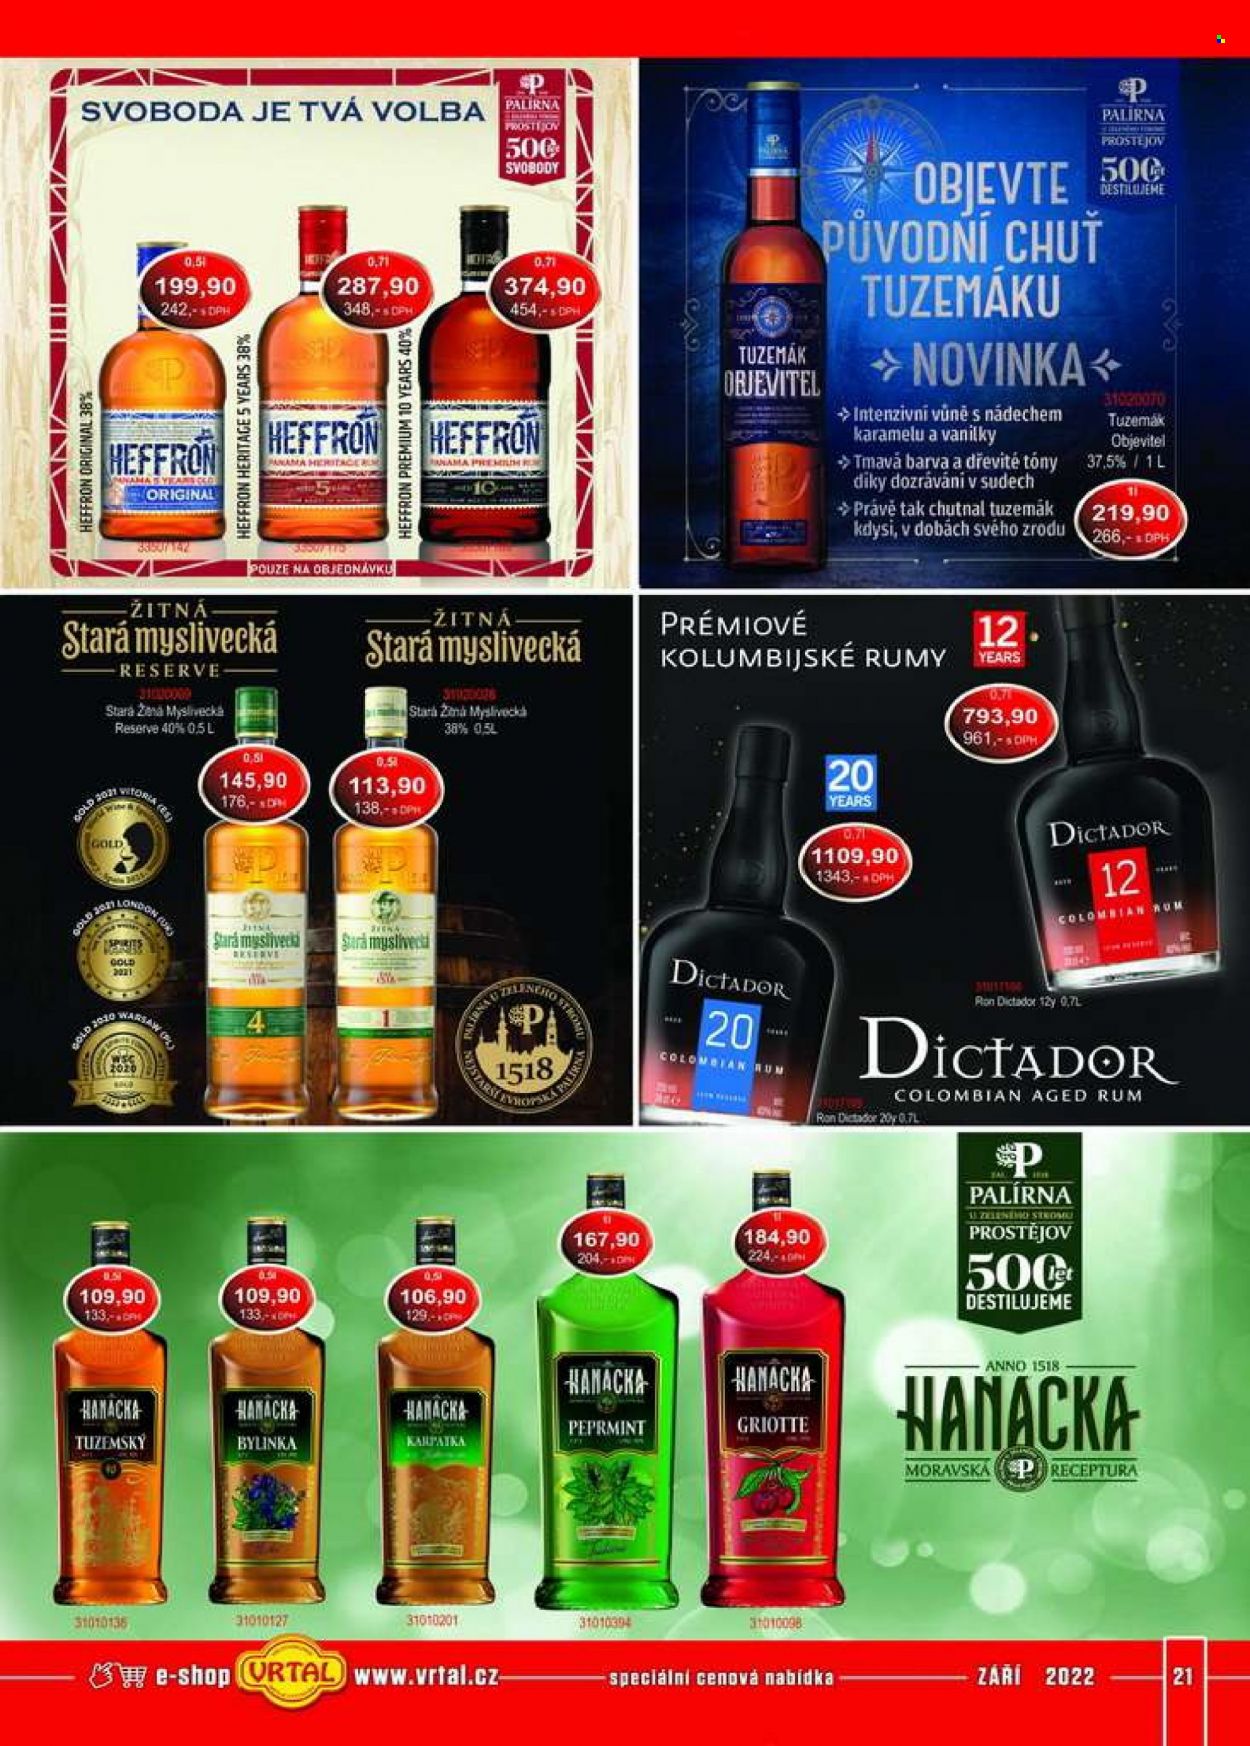 thumbnail - Leták Vrtal - 1.9.2022 - 30.9.2022 - Produkty v akci - alkohol, Stará Myslivecká, rum, griotka, whisky, peprmintový likér, Heffron, Dictador, Hanácká. Strana 21.